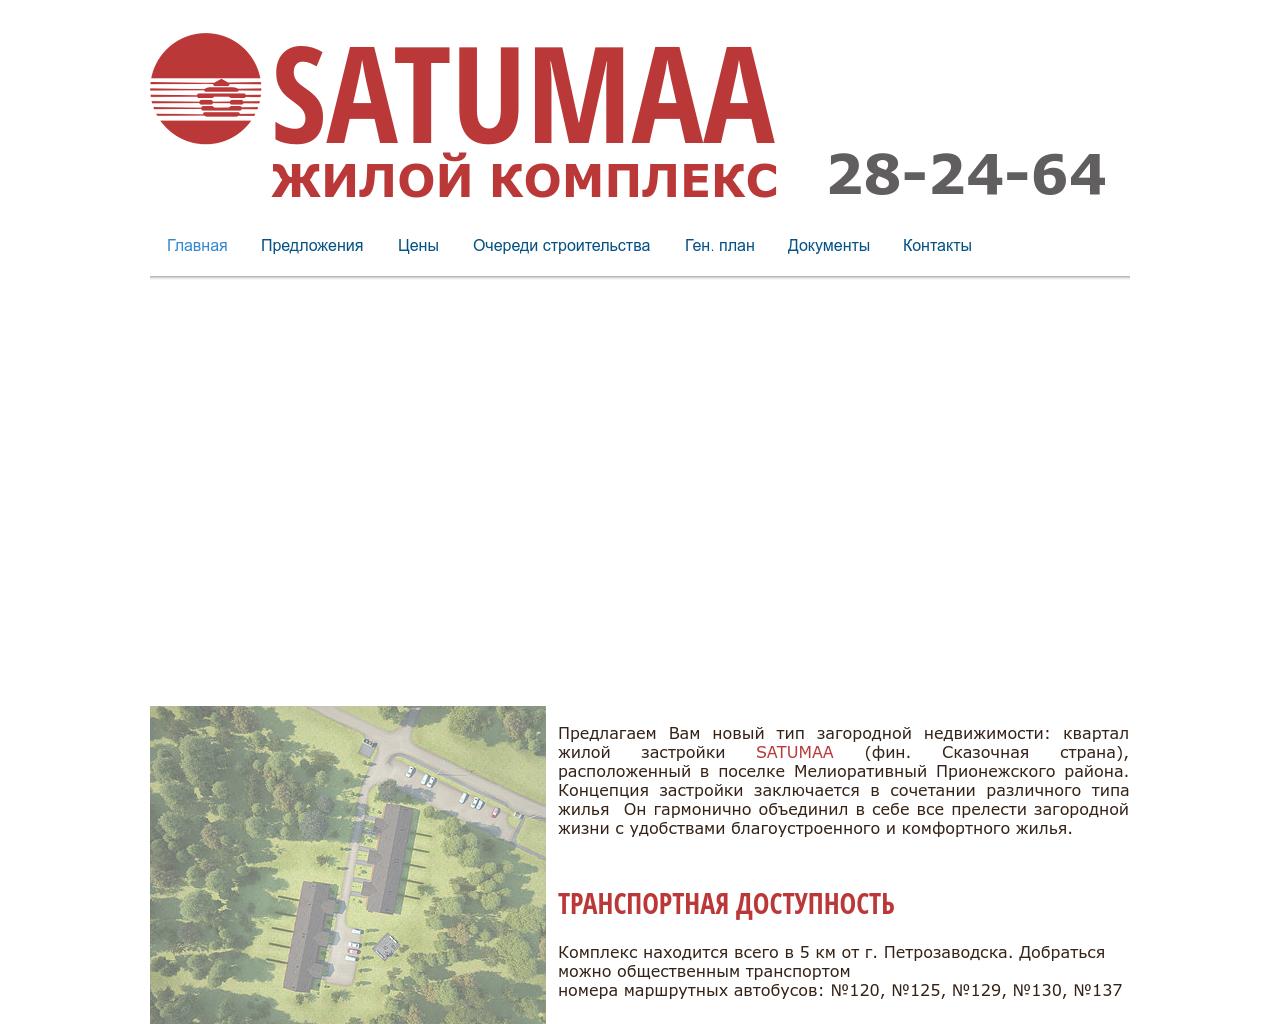 Изображение сайта satumaa.ru в разрешении 1280x1024